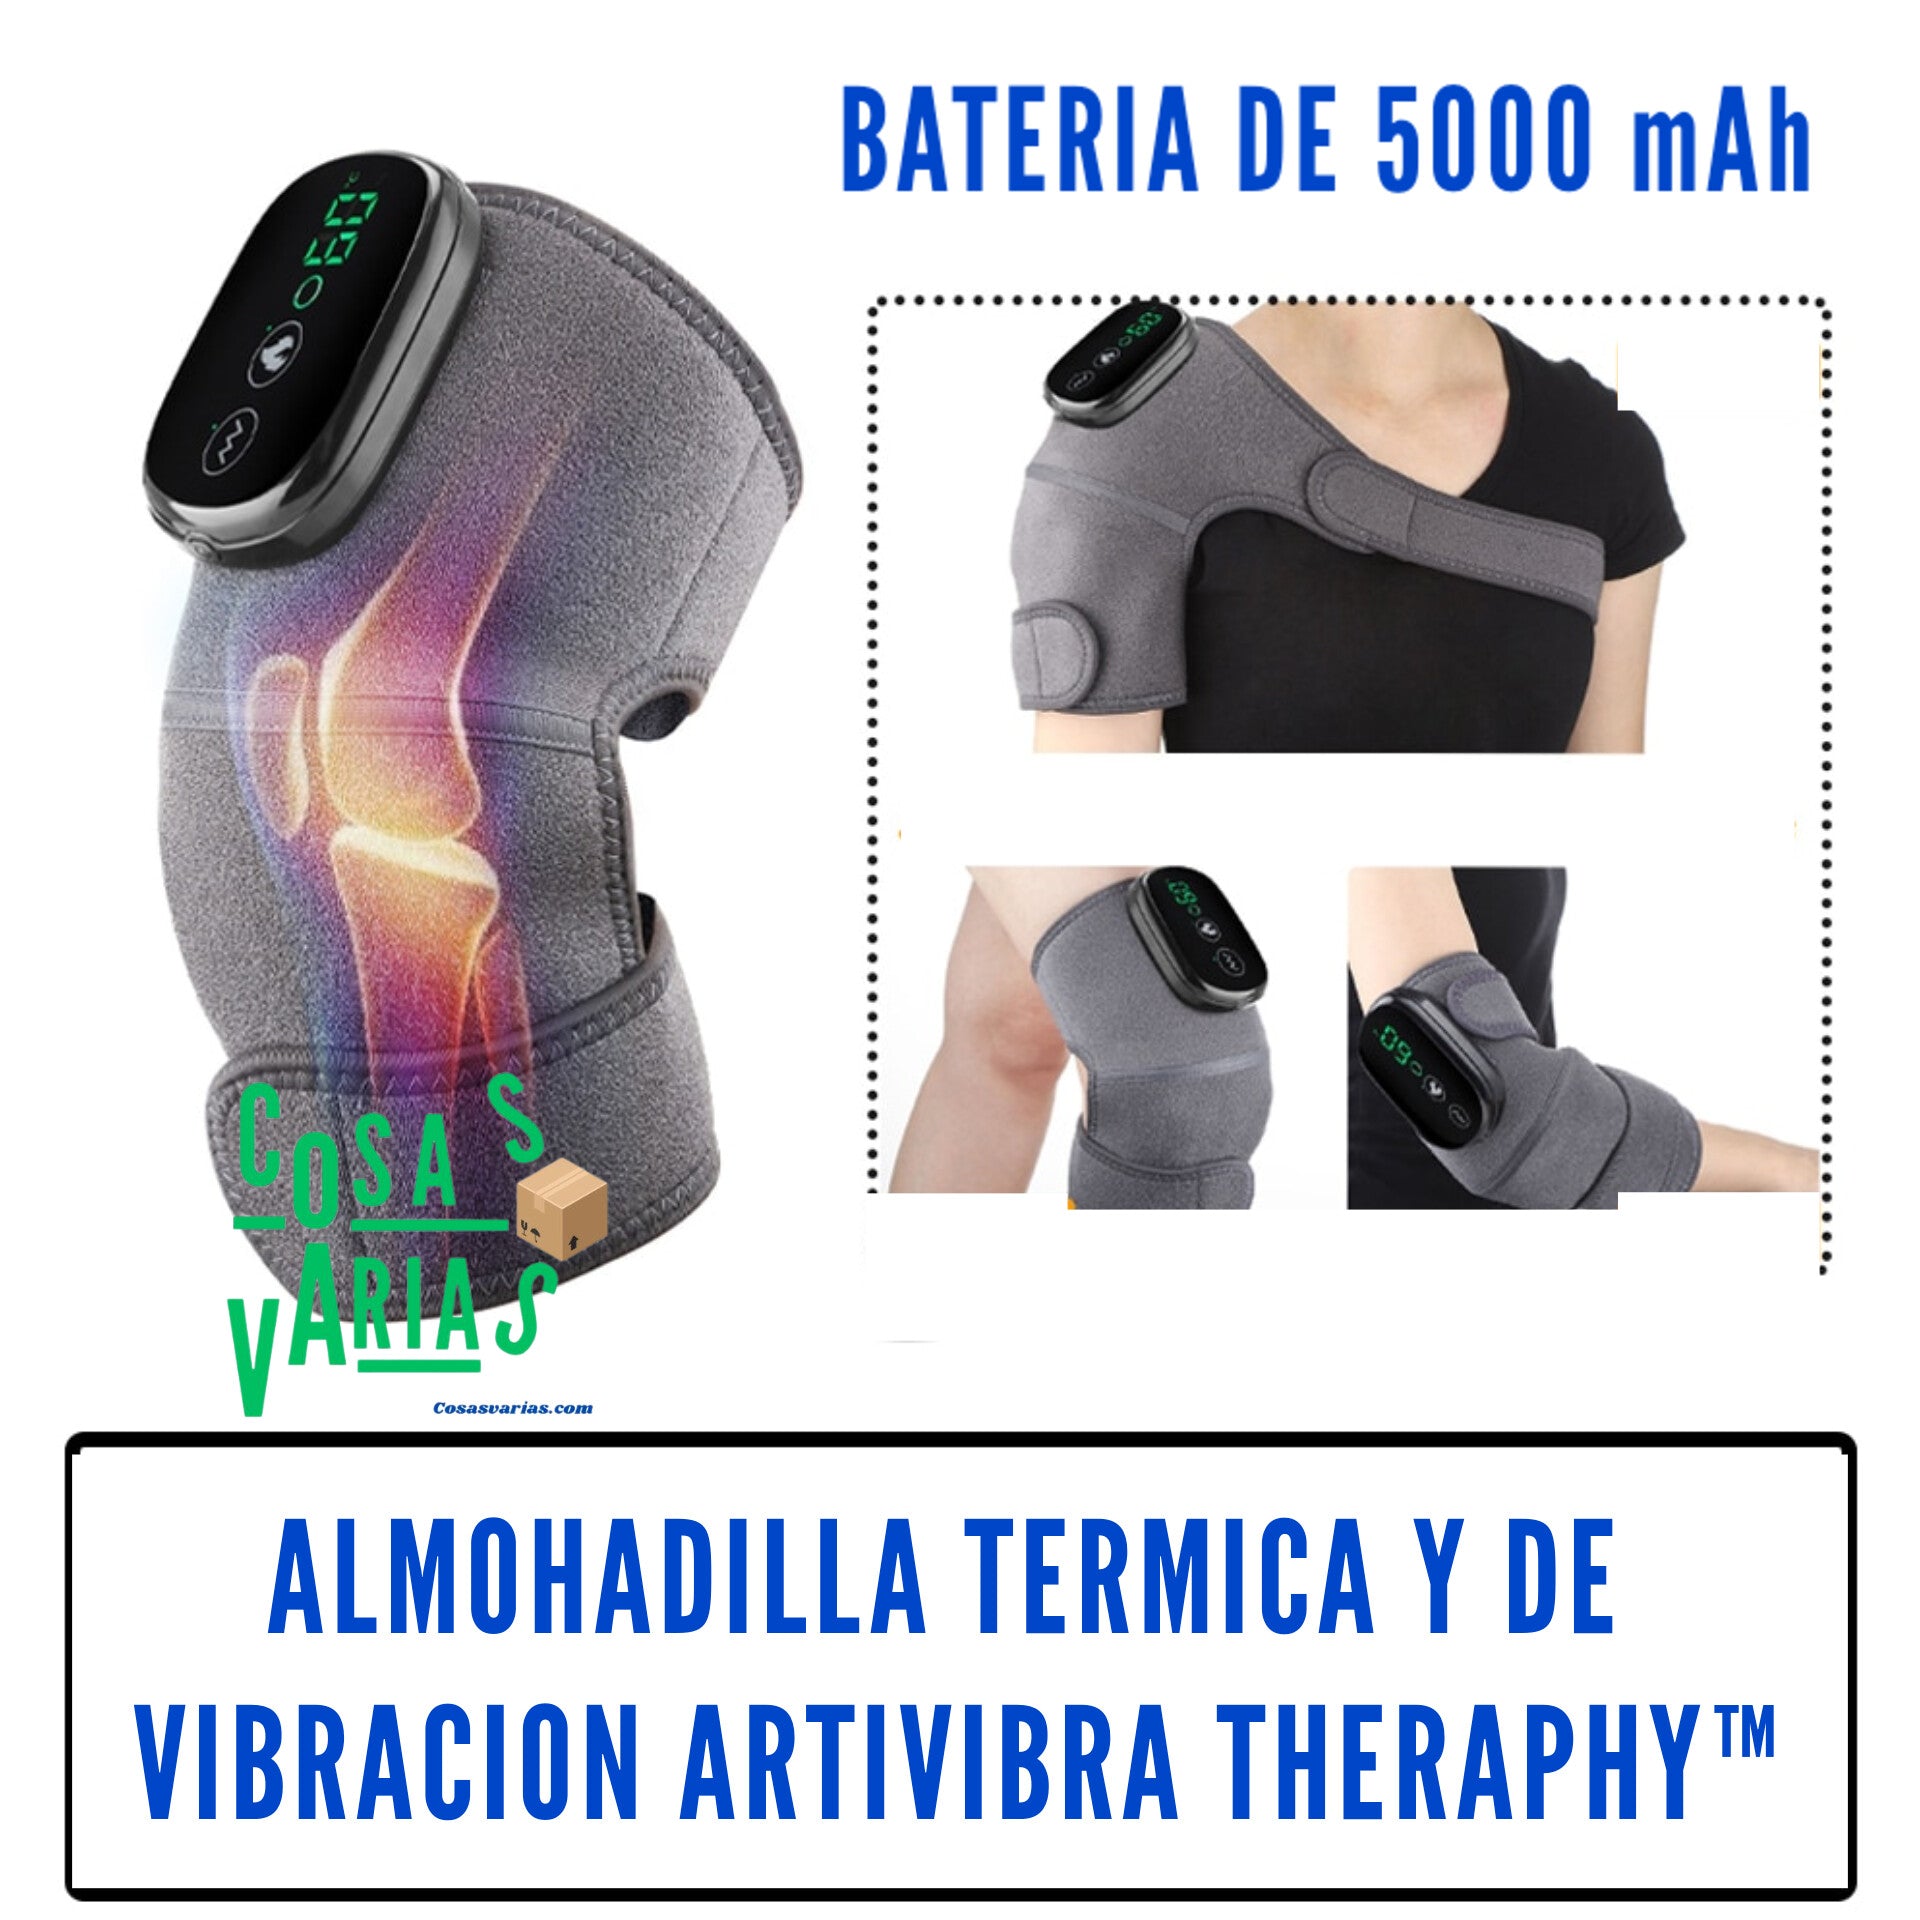 Almohadilla termica y de vibracion Artivibra Therapy™